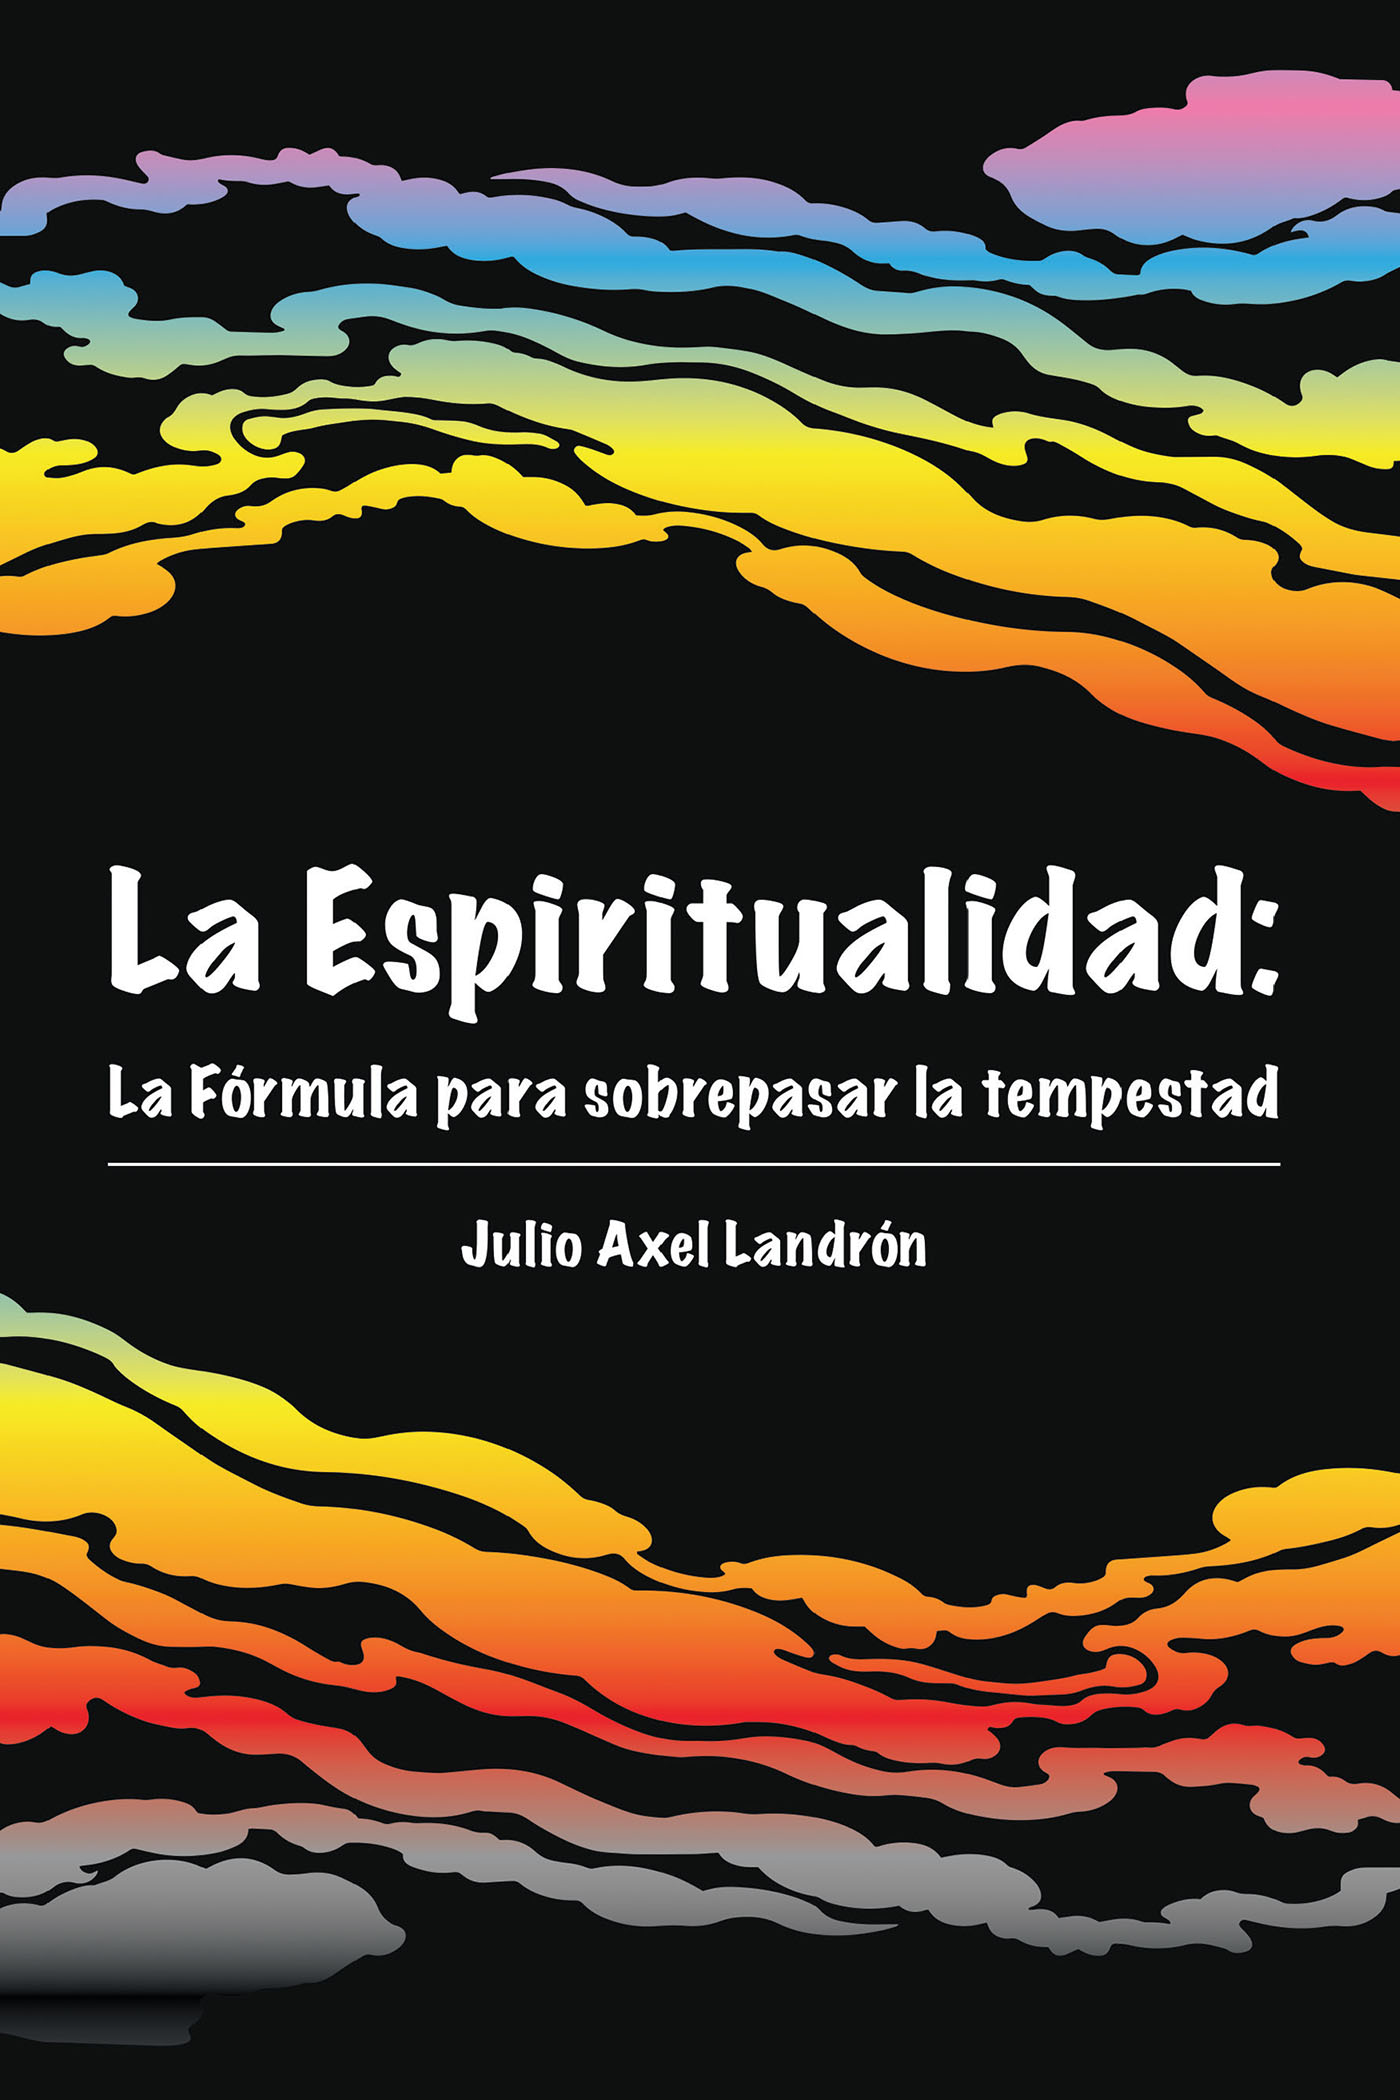 Julio Axel Landrón’s Newly Released “La Espiritualidad: La Fórmula para sobrepasar la tempestad” is a Powerful Message of the Strength of Spirituality